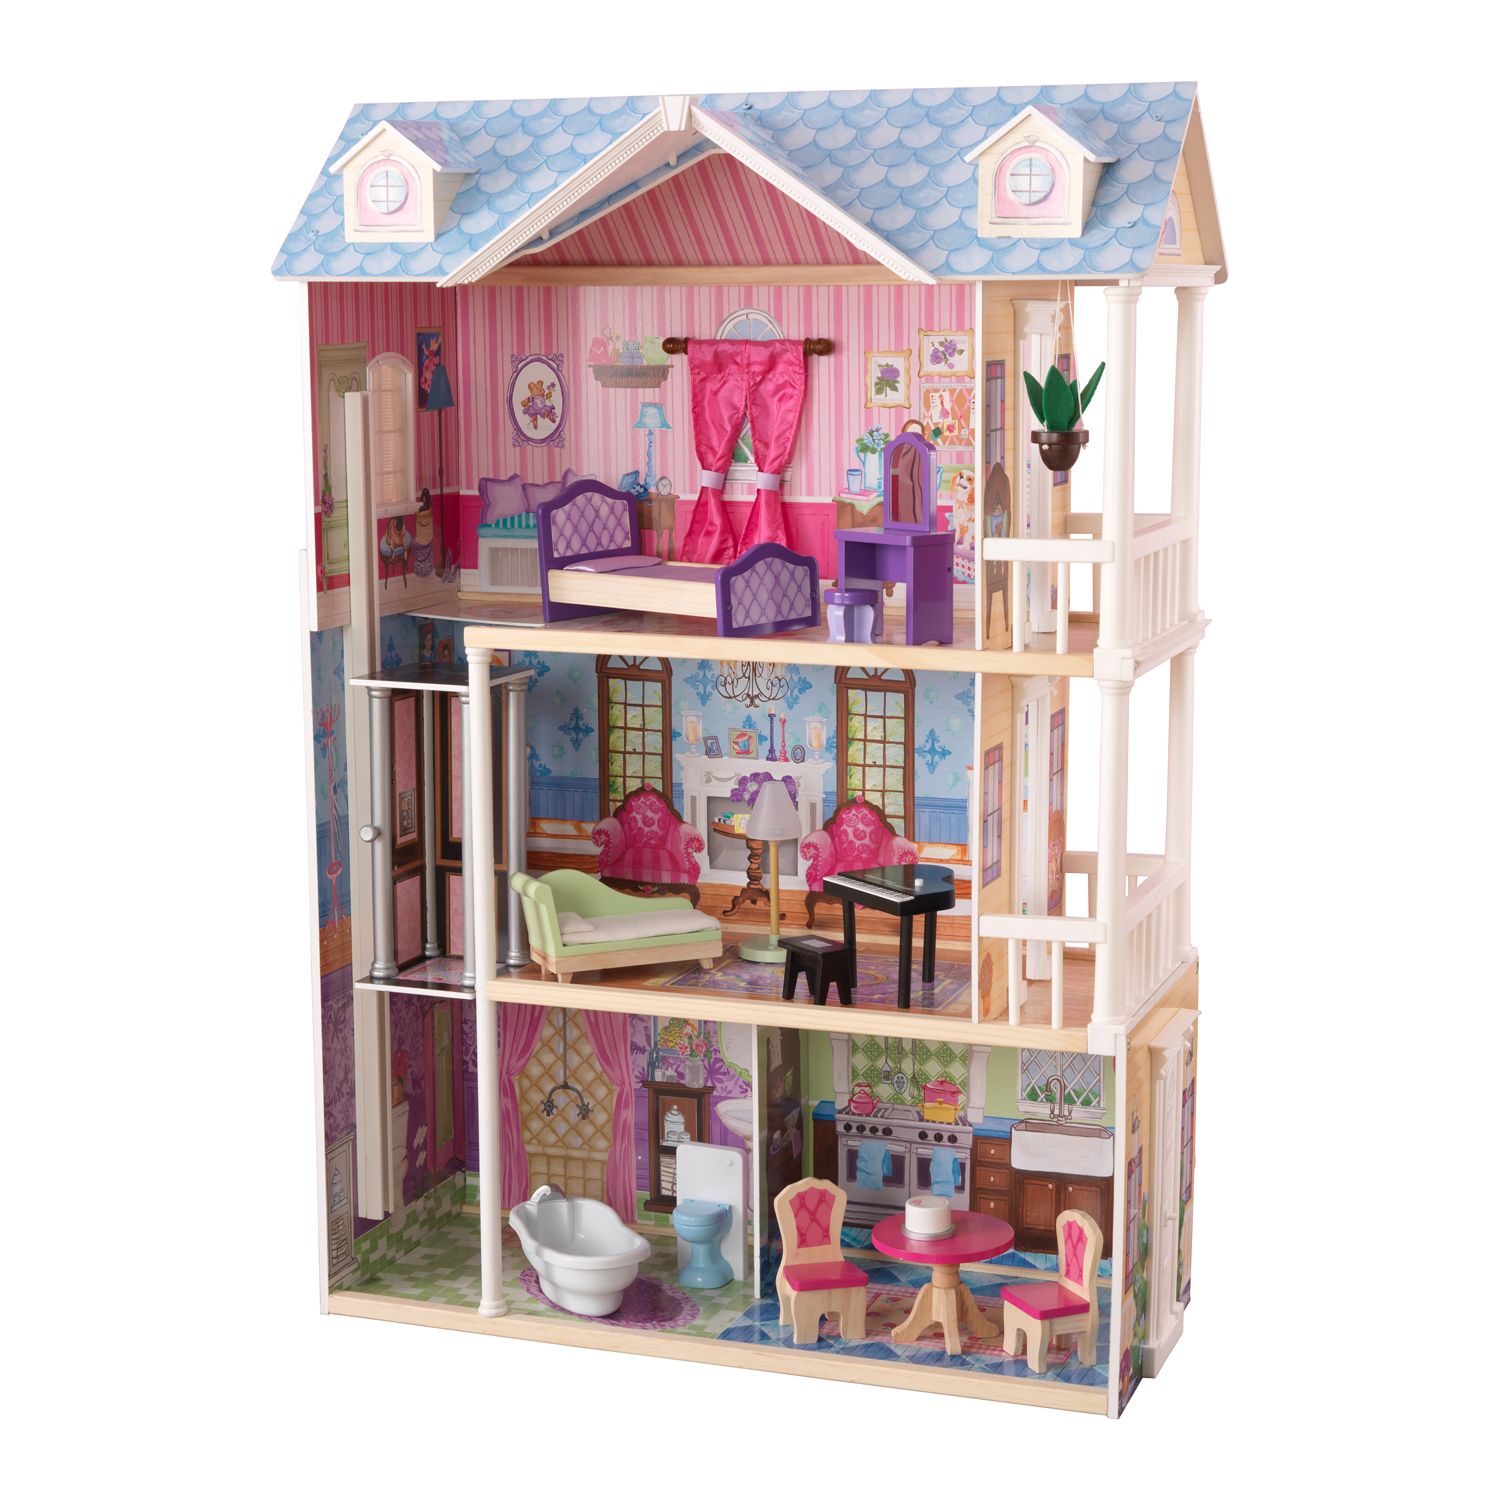 kid craft doll house